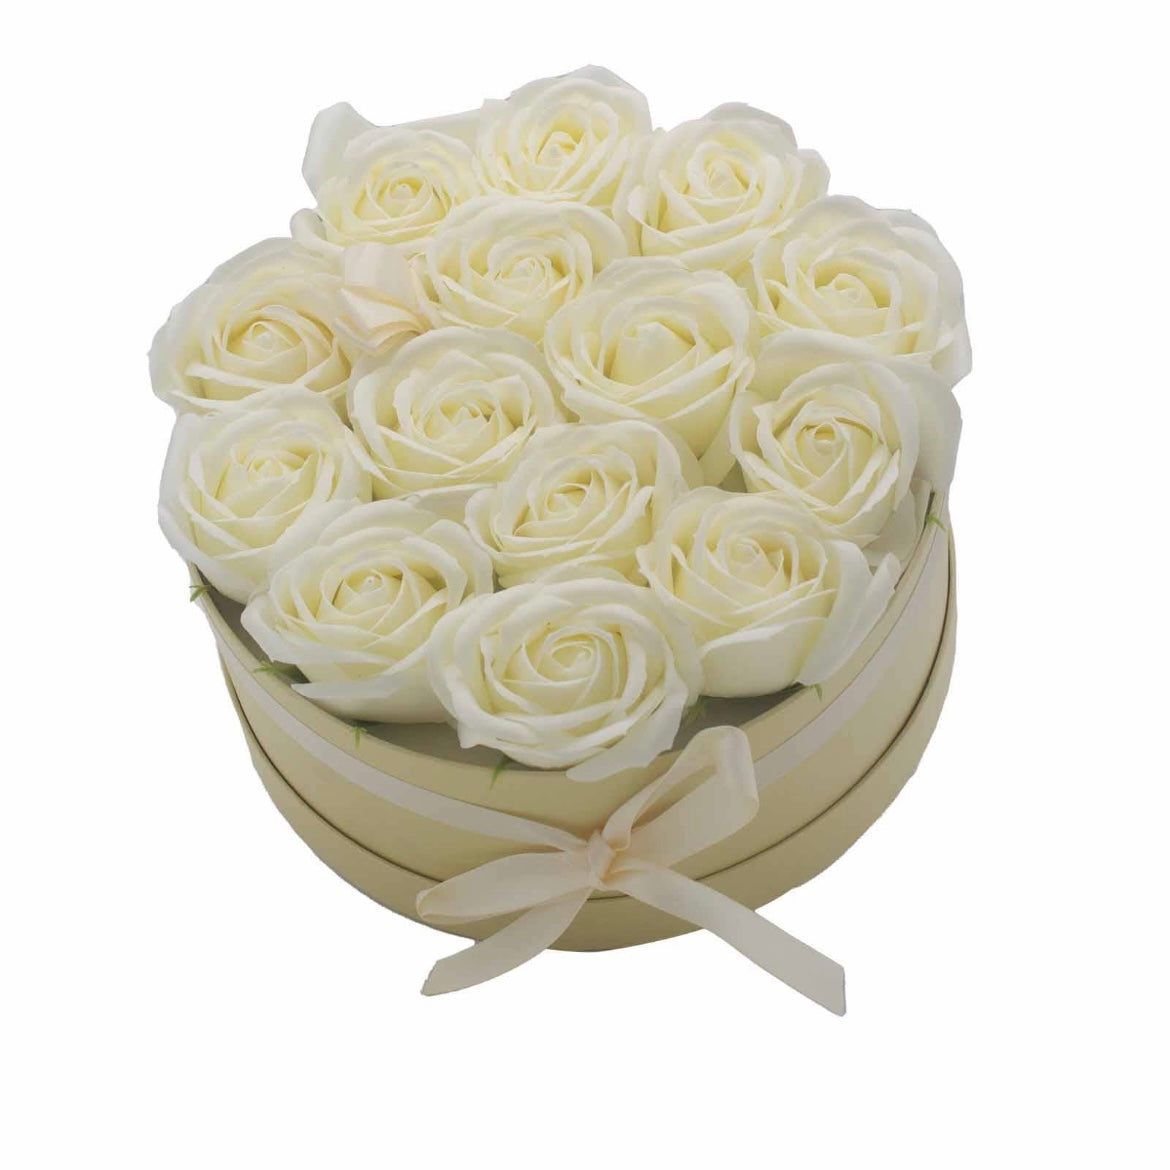 Stunning Rose Bouquet Soap - Large Round Shape Cream